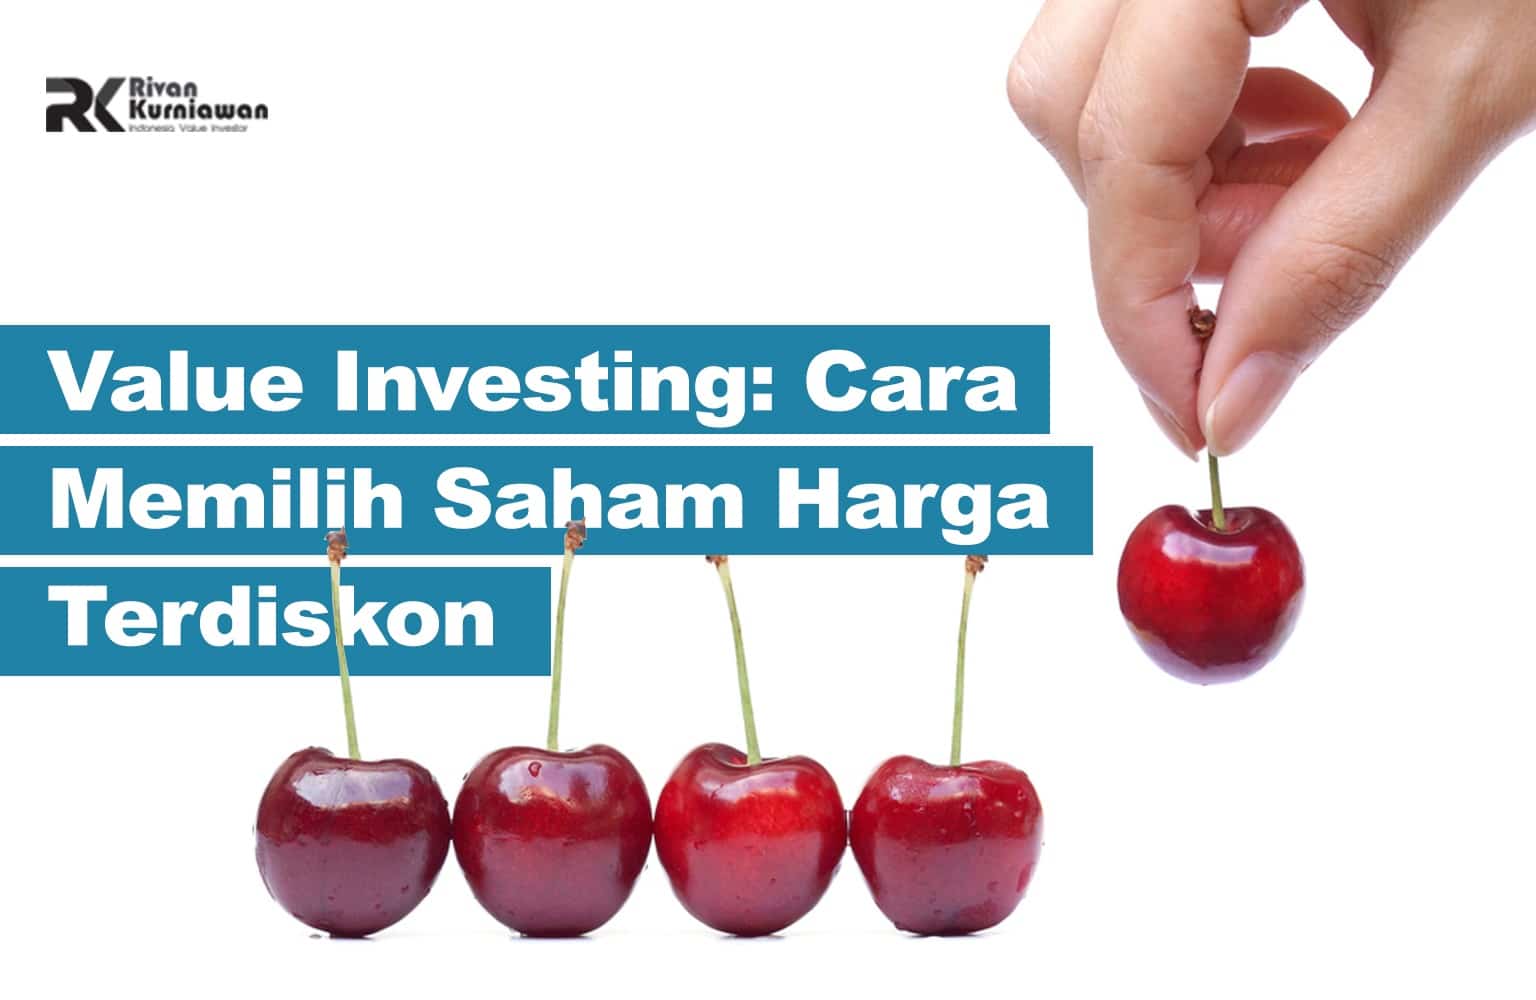 Value Investing: Cara Memilih Saham Harga Terdiskon